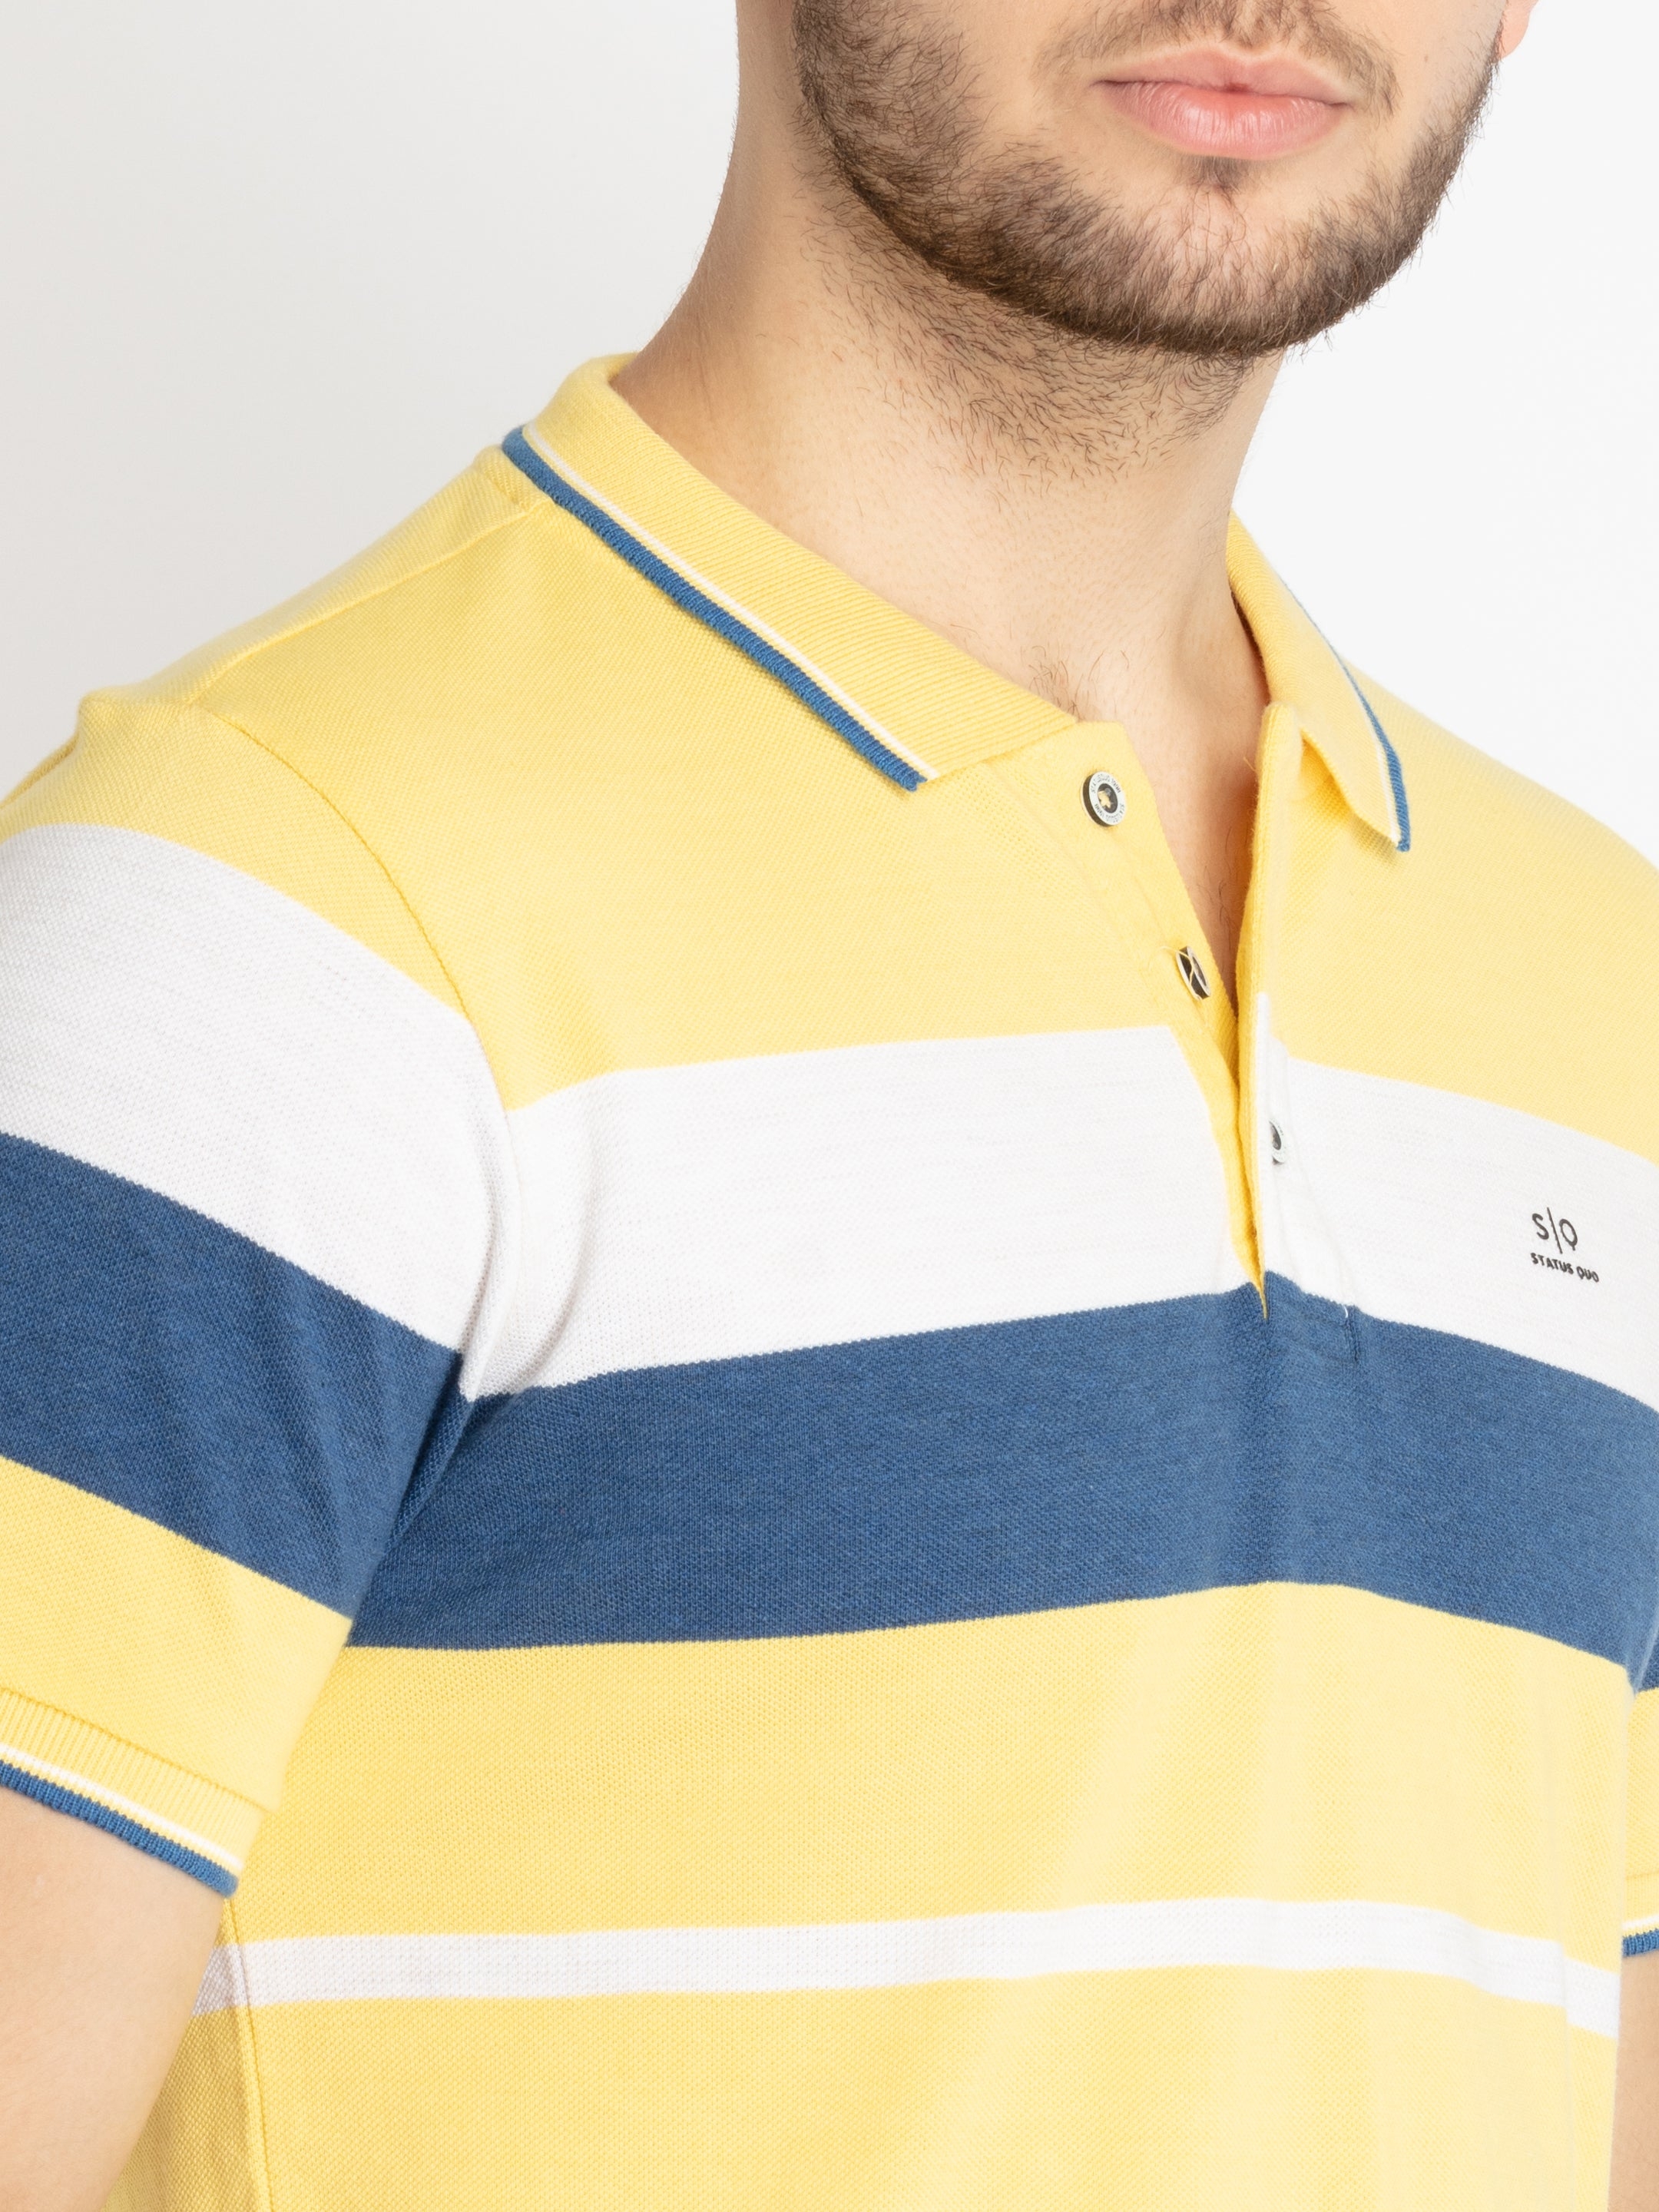 Status Quo | Men's Yellow Cotton Striped Polo T-Shirts 3